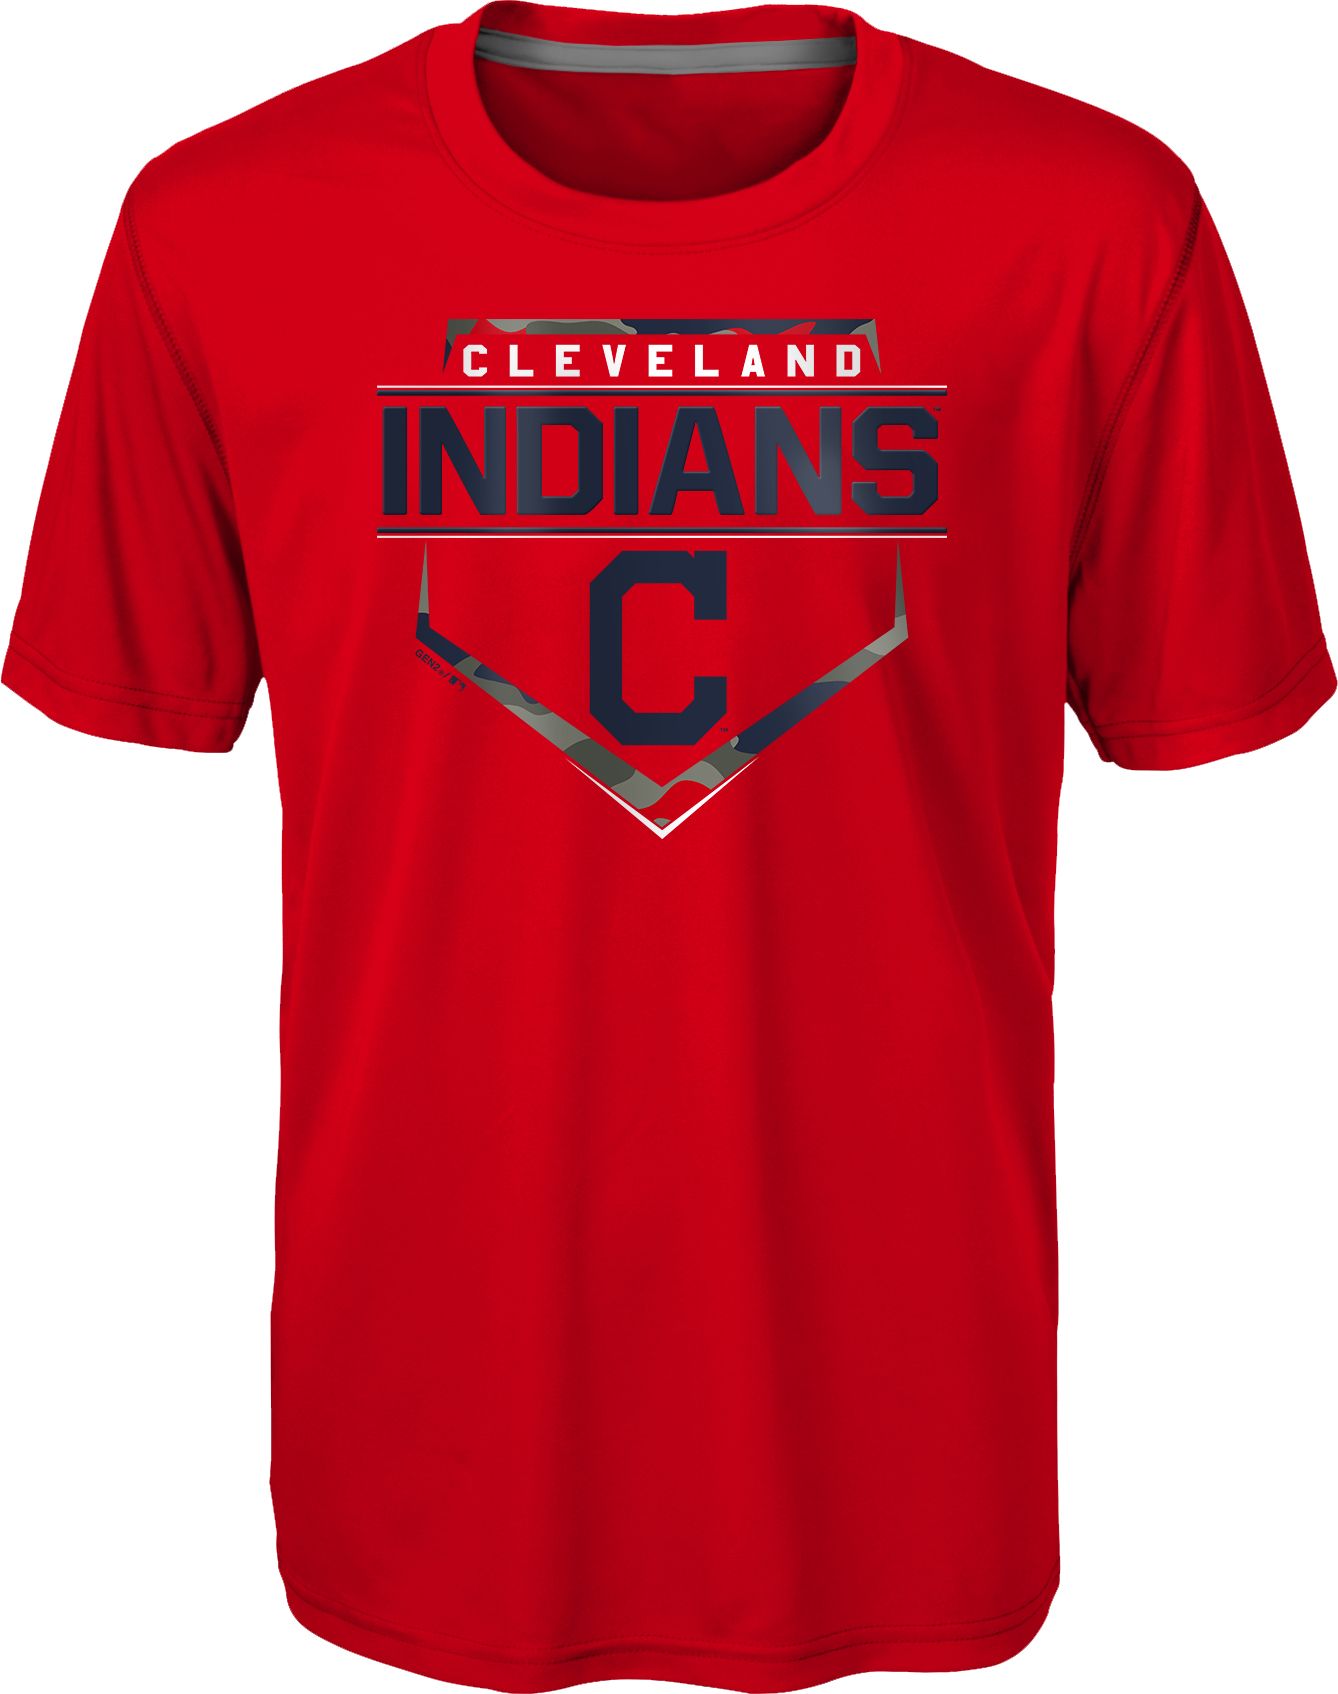 cleveland indians kids jersey